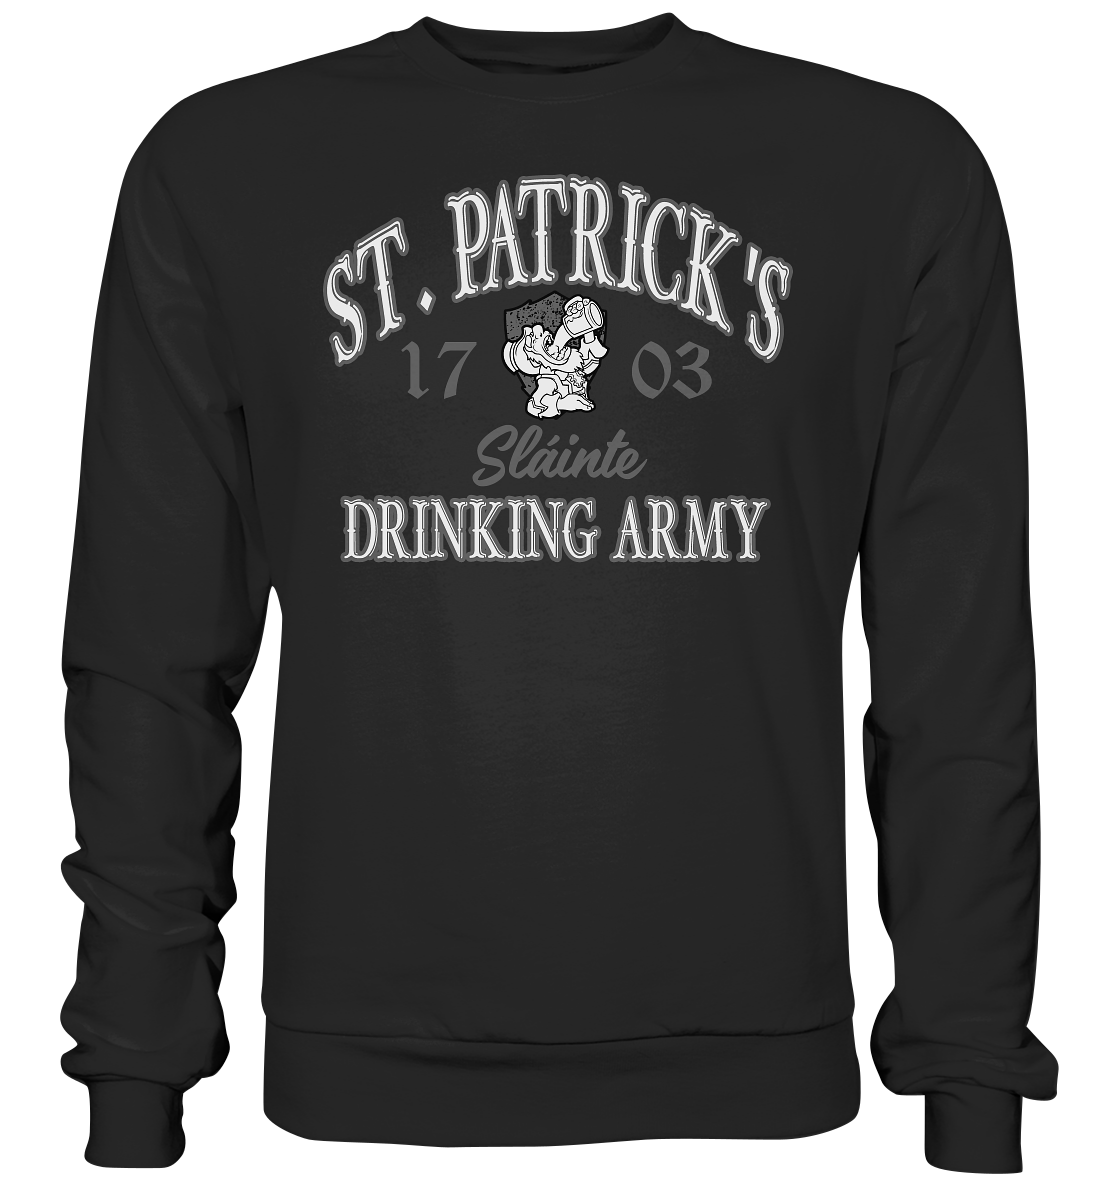 St. Patrick's Drinking Army "Sláinte" - Premium Sweatshirt